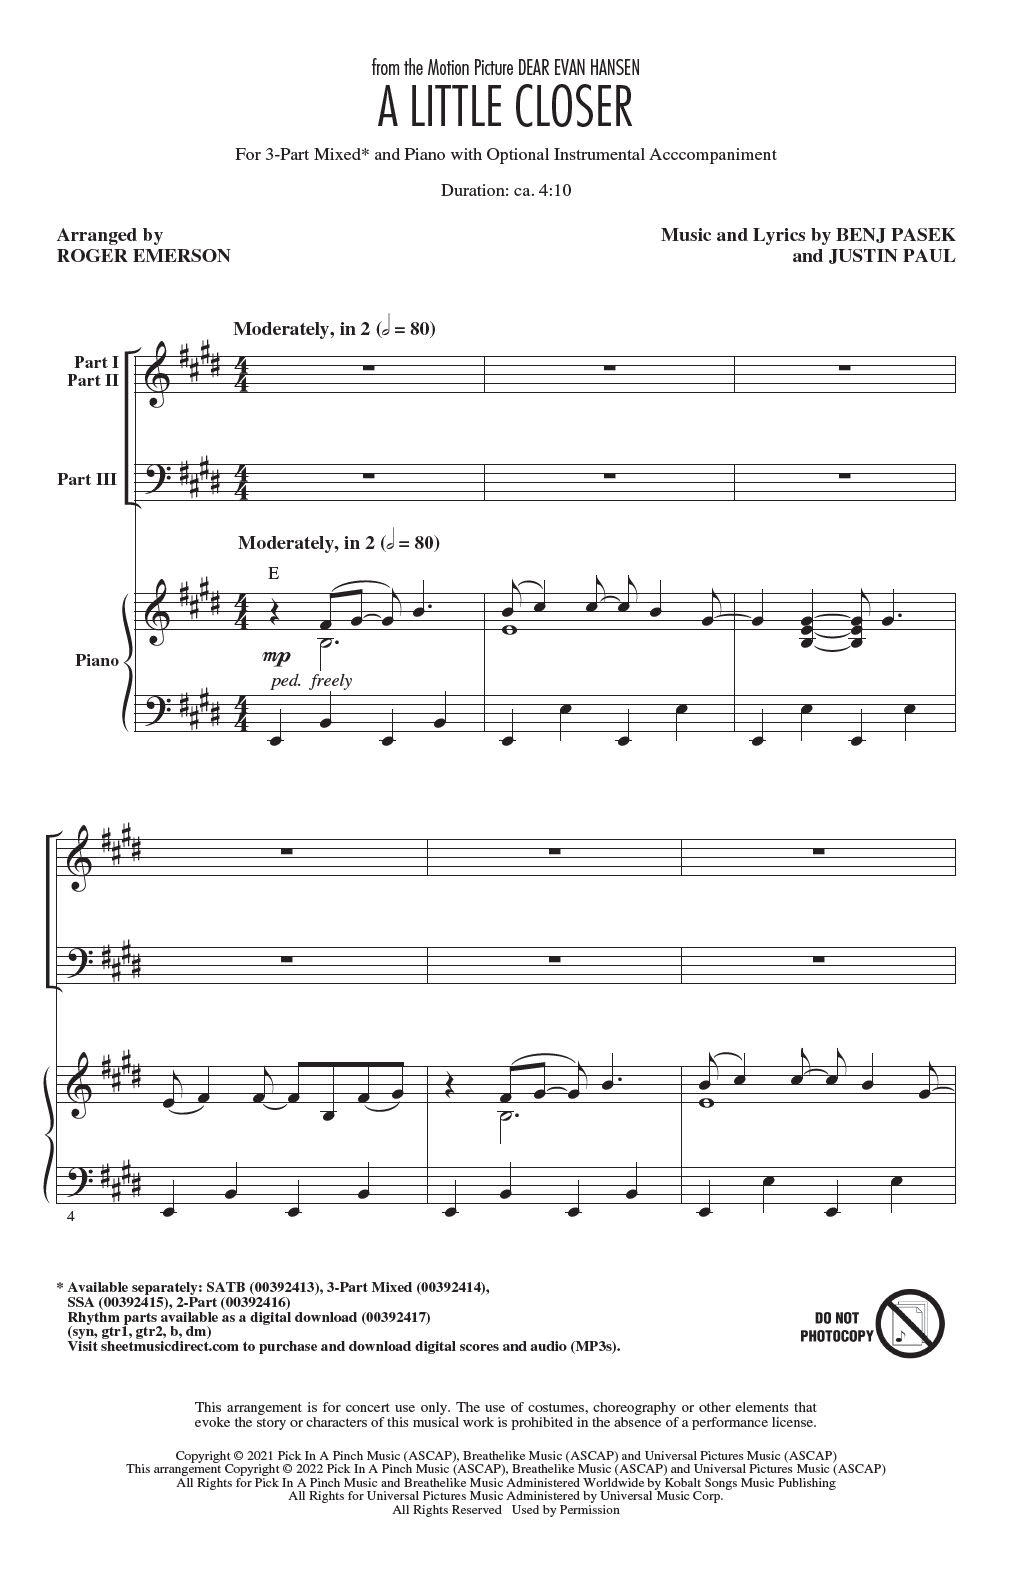 Pasek & Paul A Little Closer (from Dear Evan Hansen) (arr. Roger Emerson) Sheet Music Notes & Chords for 3-Part Mixed Choir - Download or Print PDF